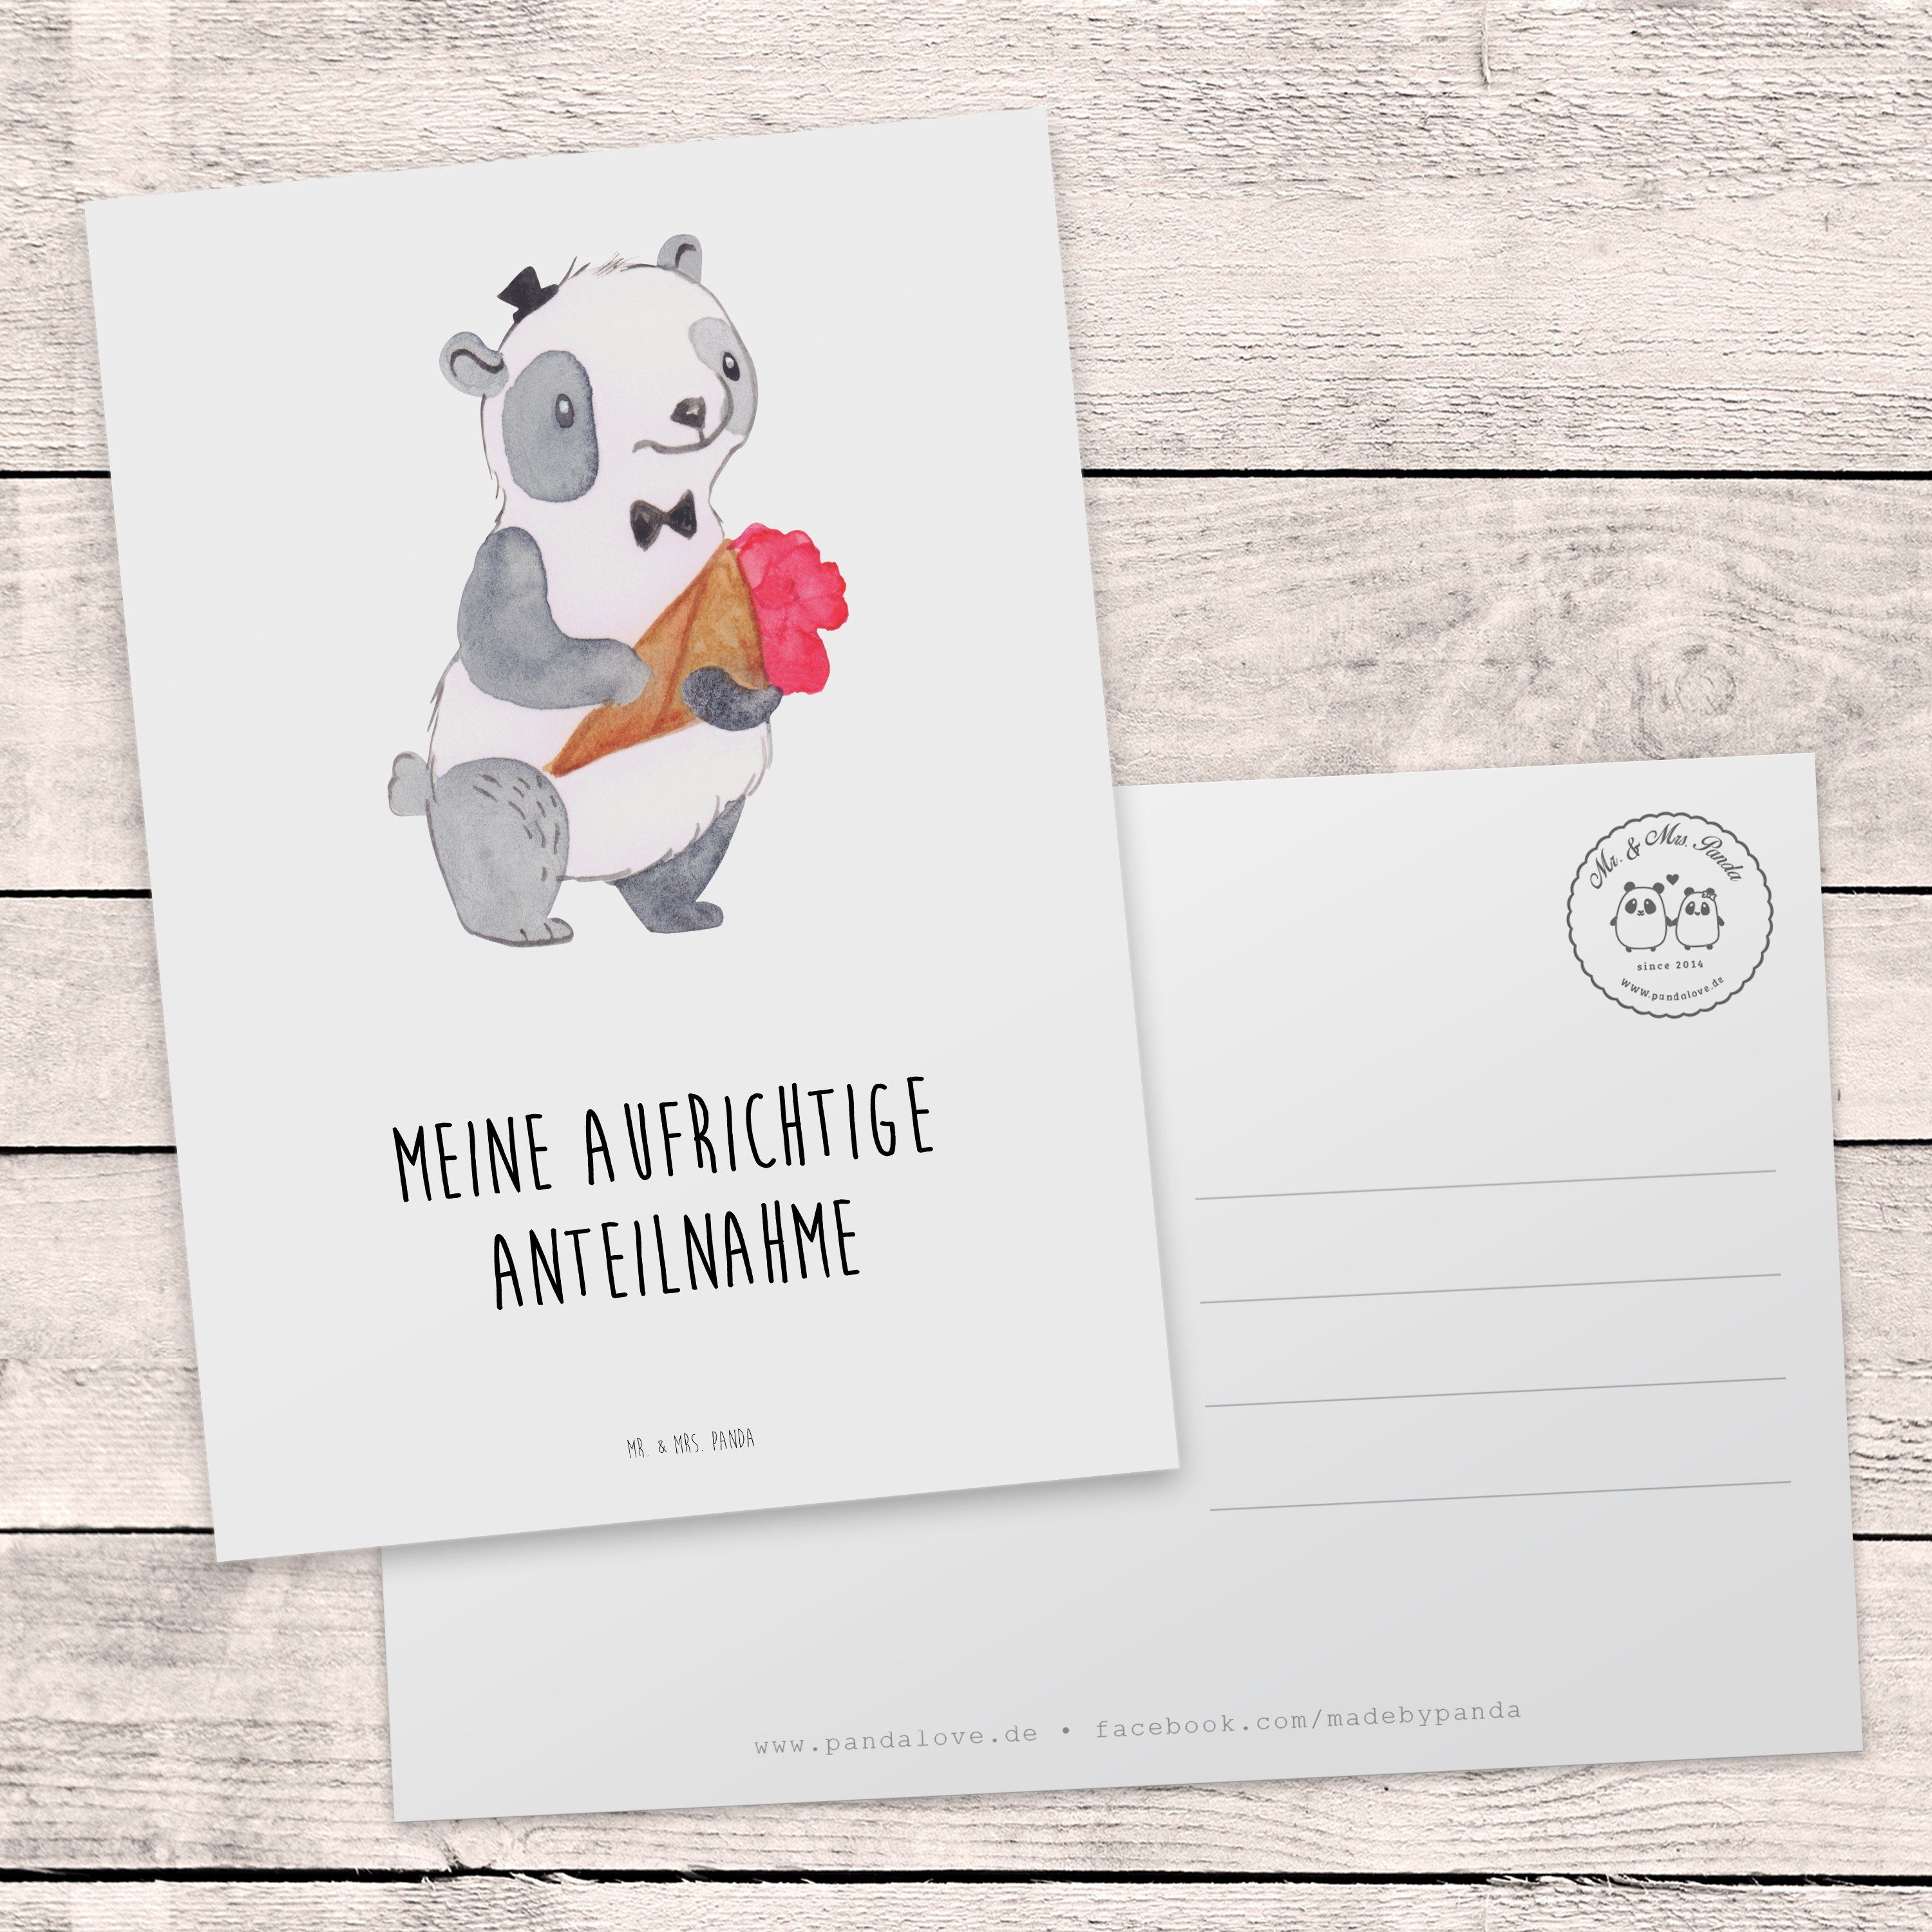 Mr. & Mrs. Panda Beileidskarte - Anteilnahme Trauer, Panda Trauerkarte, - Tod, Beil Weiß Beerdigung